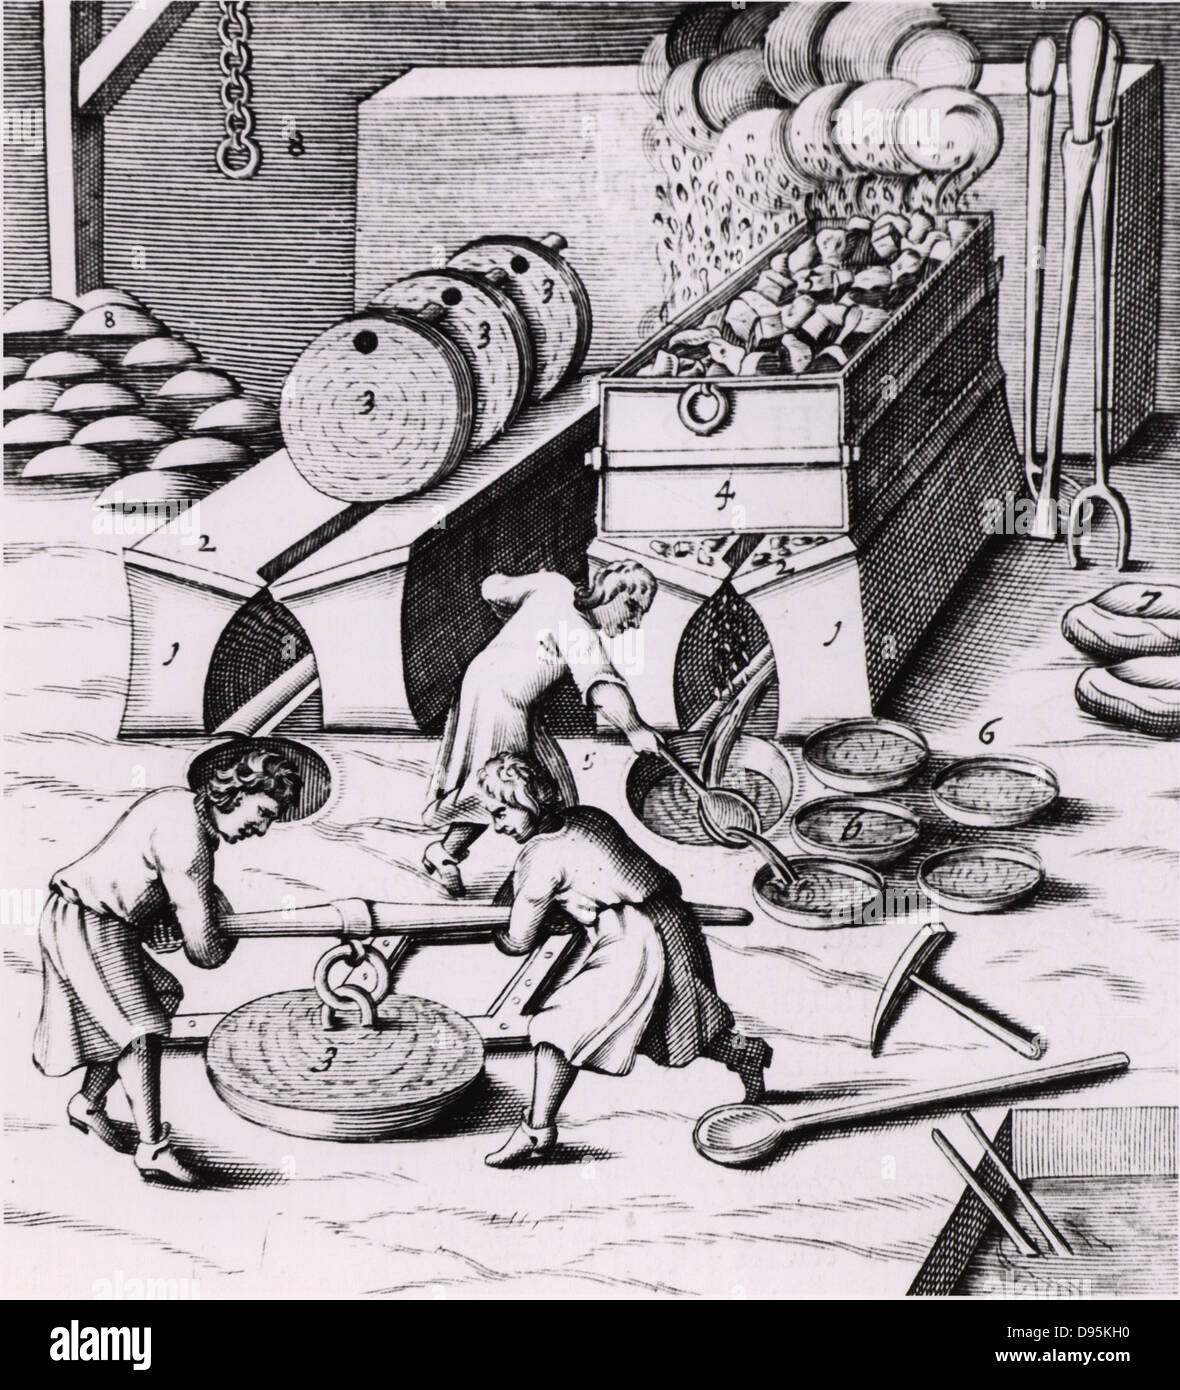 La fusione di rame. Da un 1683 edizione in lingua inglese di Lazarus Ercker 'Beschreibung allerfurnemisten mineralischen Ertzt- und Berckwercksarten' originariamente pubblicato a Praga nel 1574. Incisione su rame. Foto Stock